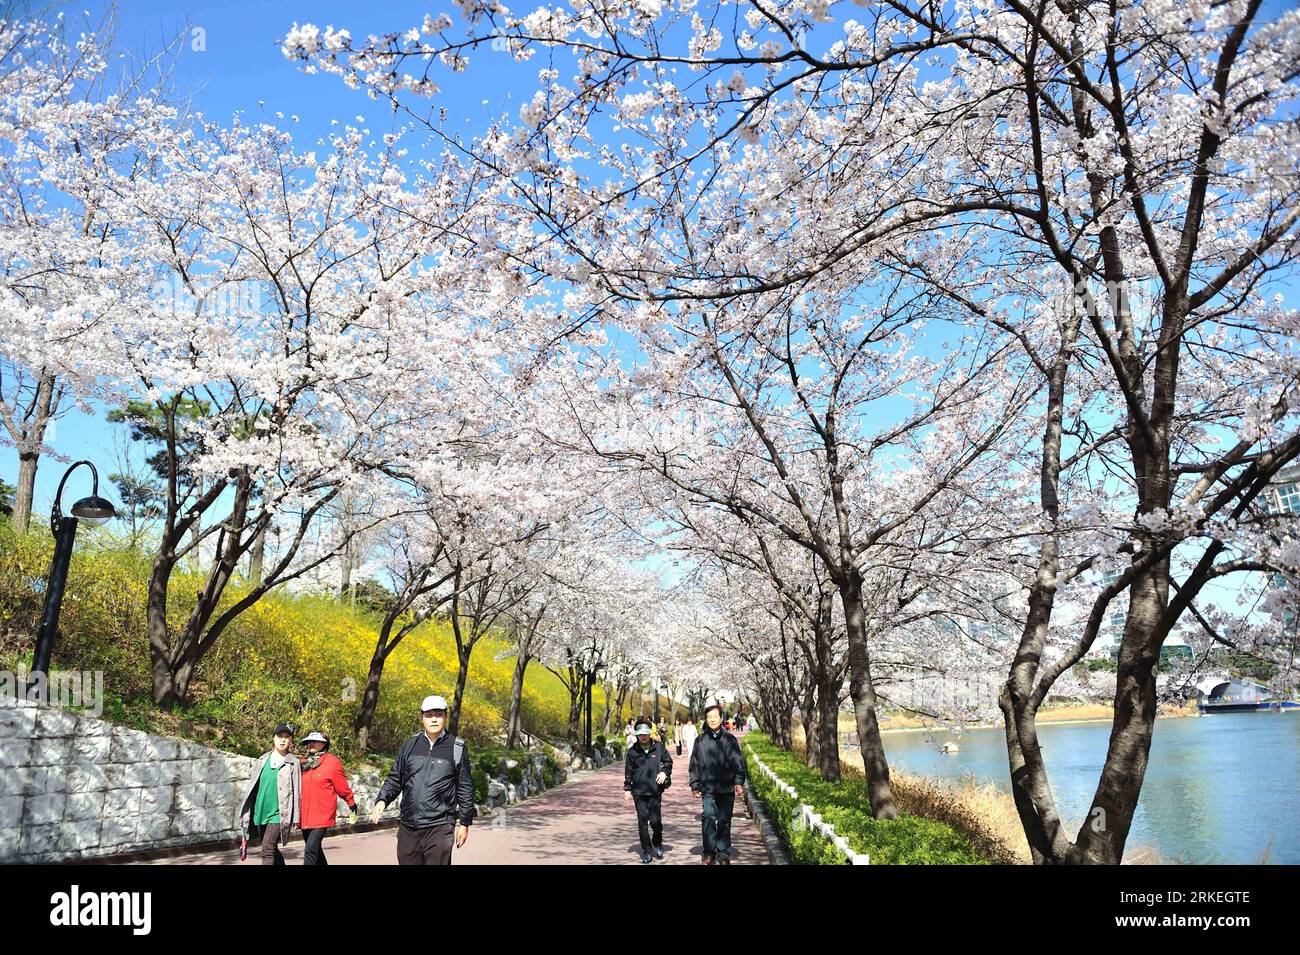 Bildnummer: 55255854  Datum: 12.04.2011  Copyright: imago/Xinhua (110412) -- SEOUL, April 12, 2011 (Xinhua) -- Tourists view cherry blossoms near a lake at Seokchon Lake Park in Songpa-gu in Seoul, capital of South Korea, on April 12, 2011. (Xinhua/Zhang Kai) (lr) SOUTH KOREA-SEOUL-CHERRY BLOSSOM PUBLICATIONxNOTxINxCHN Gesellschaft Jahreszeit Frühling Kirschblüte Blüte kbdig xkg 2011 quer  o0 Kirschbaum, Kirschbaumblüte, Totale    Bildnummer 55255854 Date 12 04 2011 Copyright Imago XINHUA  Seoul April 12 2011 XINHUA tourists View Cherry Blossoms Near a Lake AT Seokchon Lake Park in Songpa GU i Stock Photo